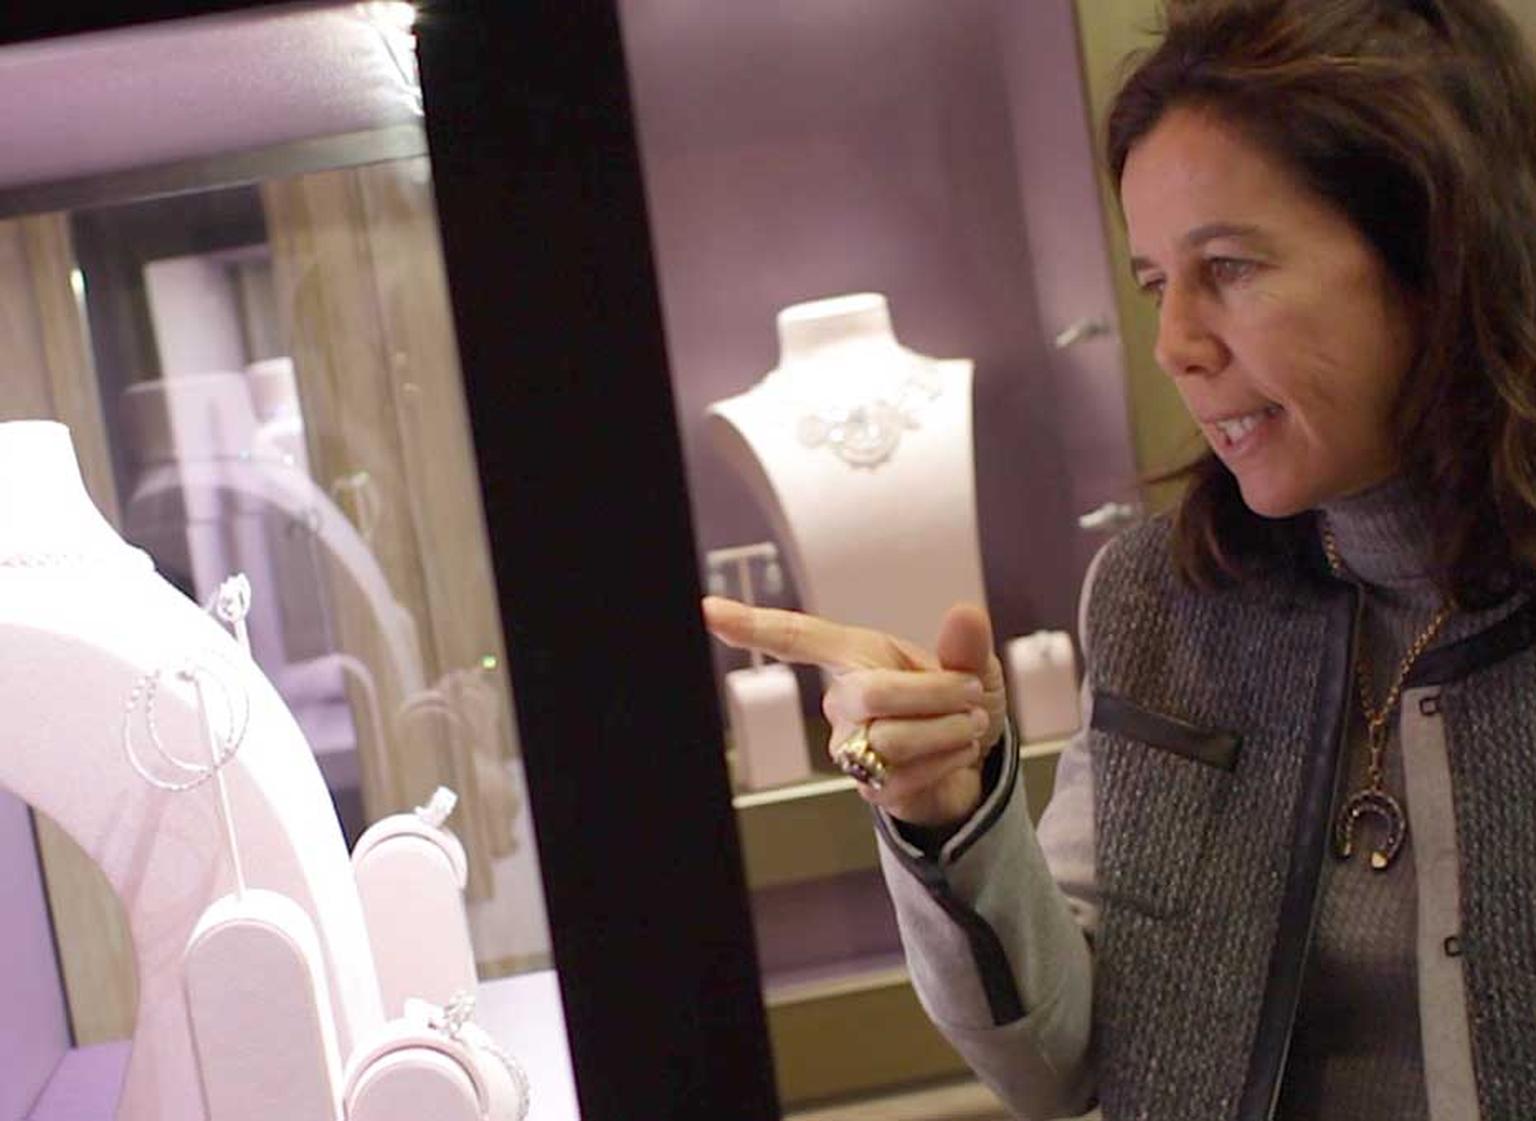 Luxury goods expert Christine Pasquier, co-founder of The Jewellery Editor.